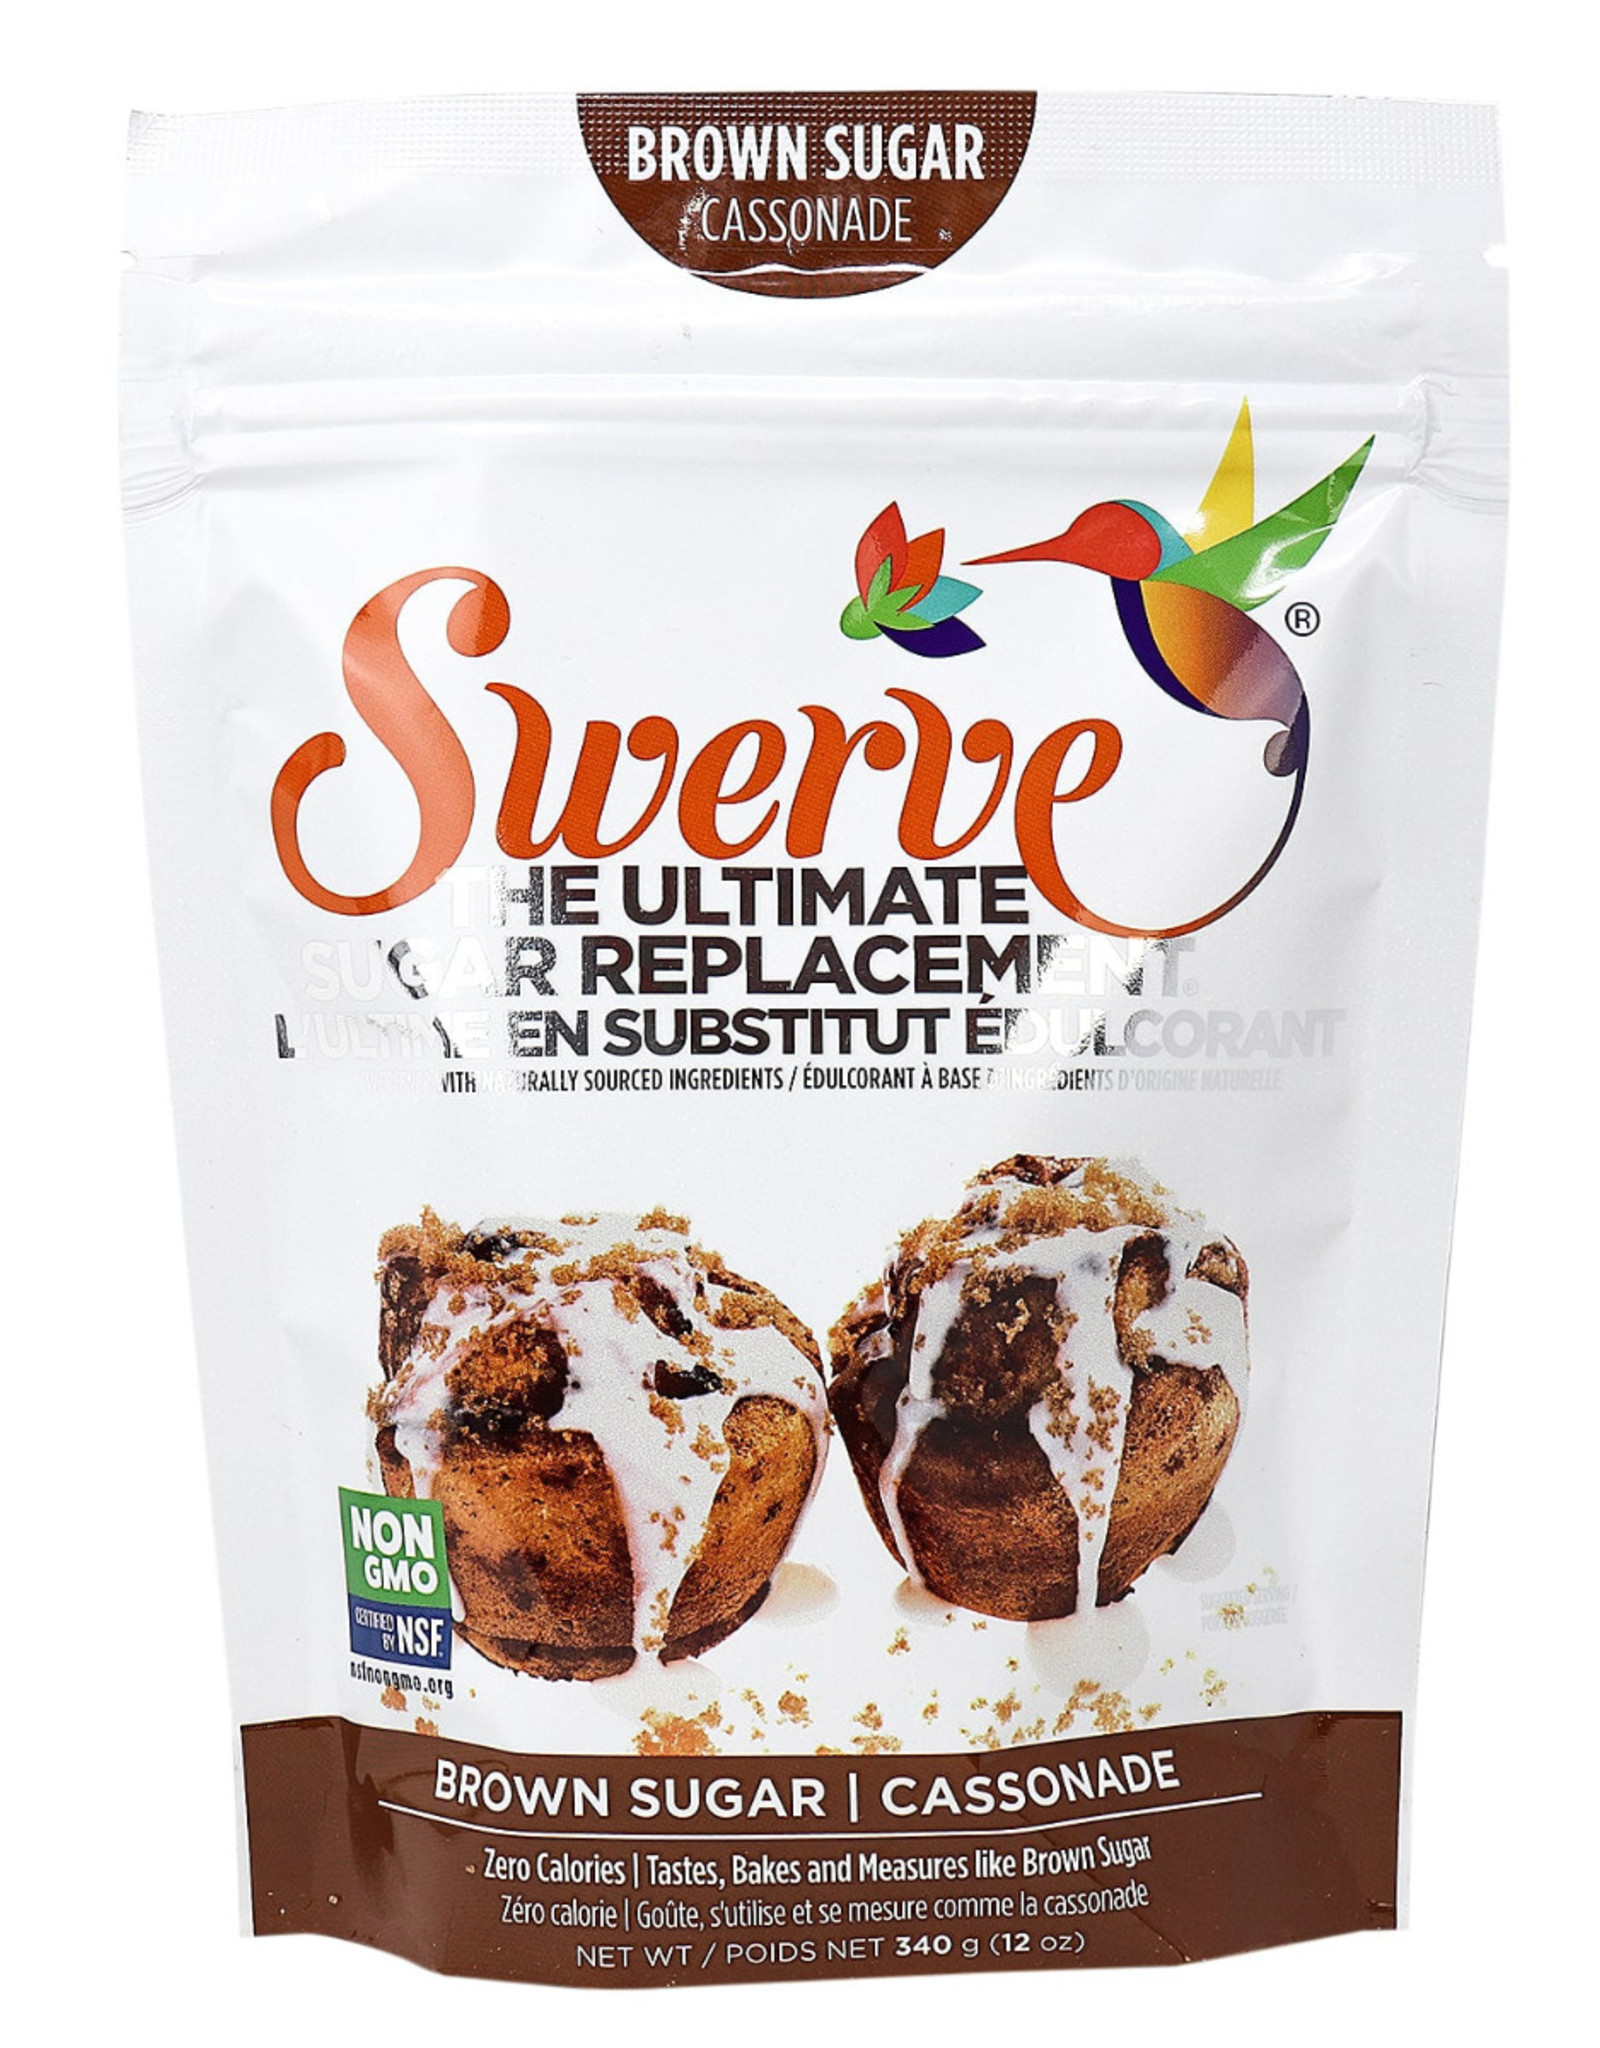 Swerve Brown Sugar 340g bag